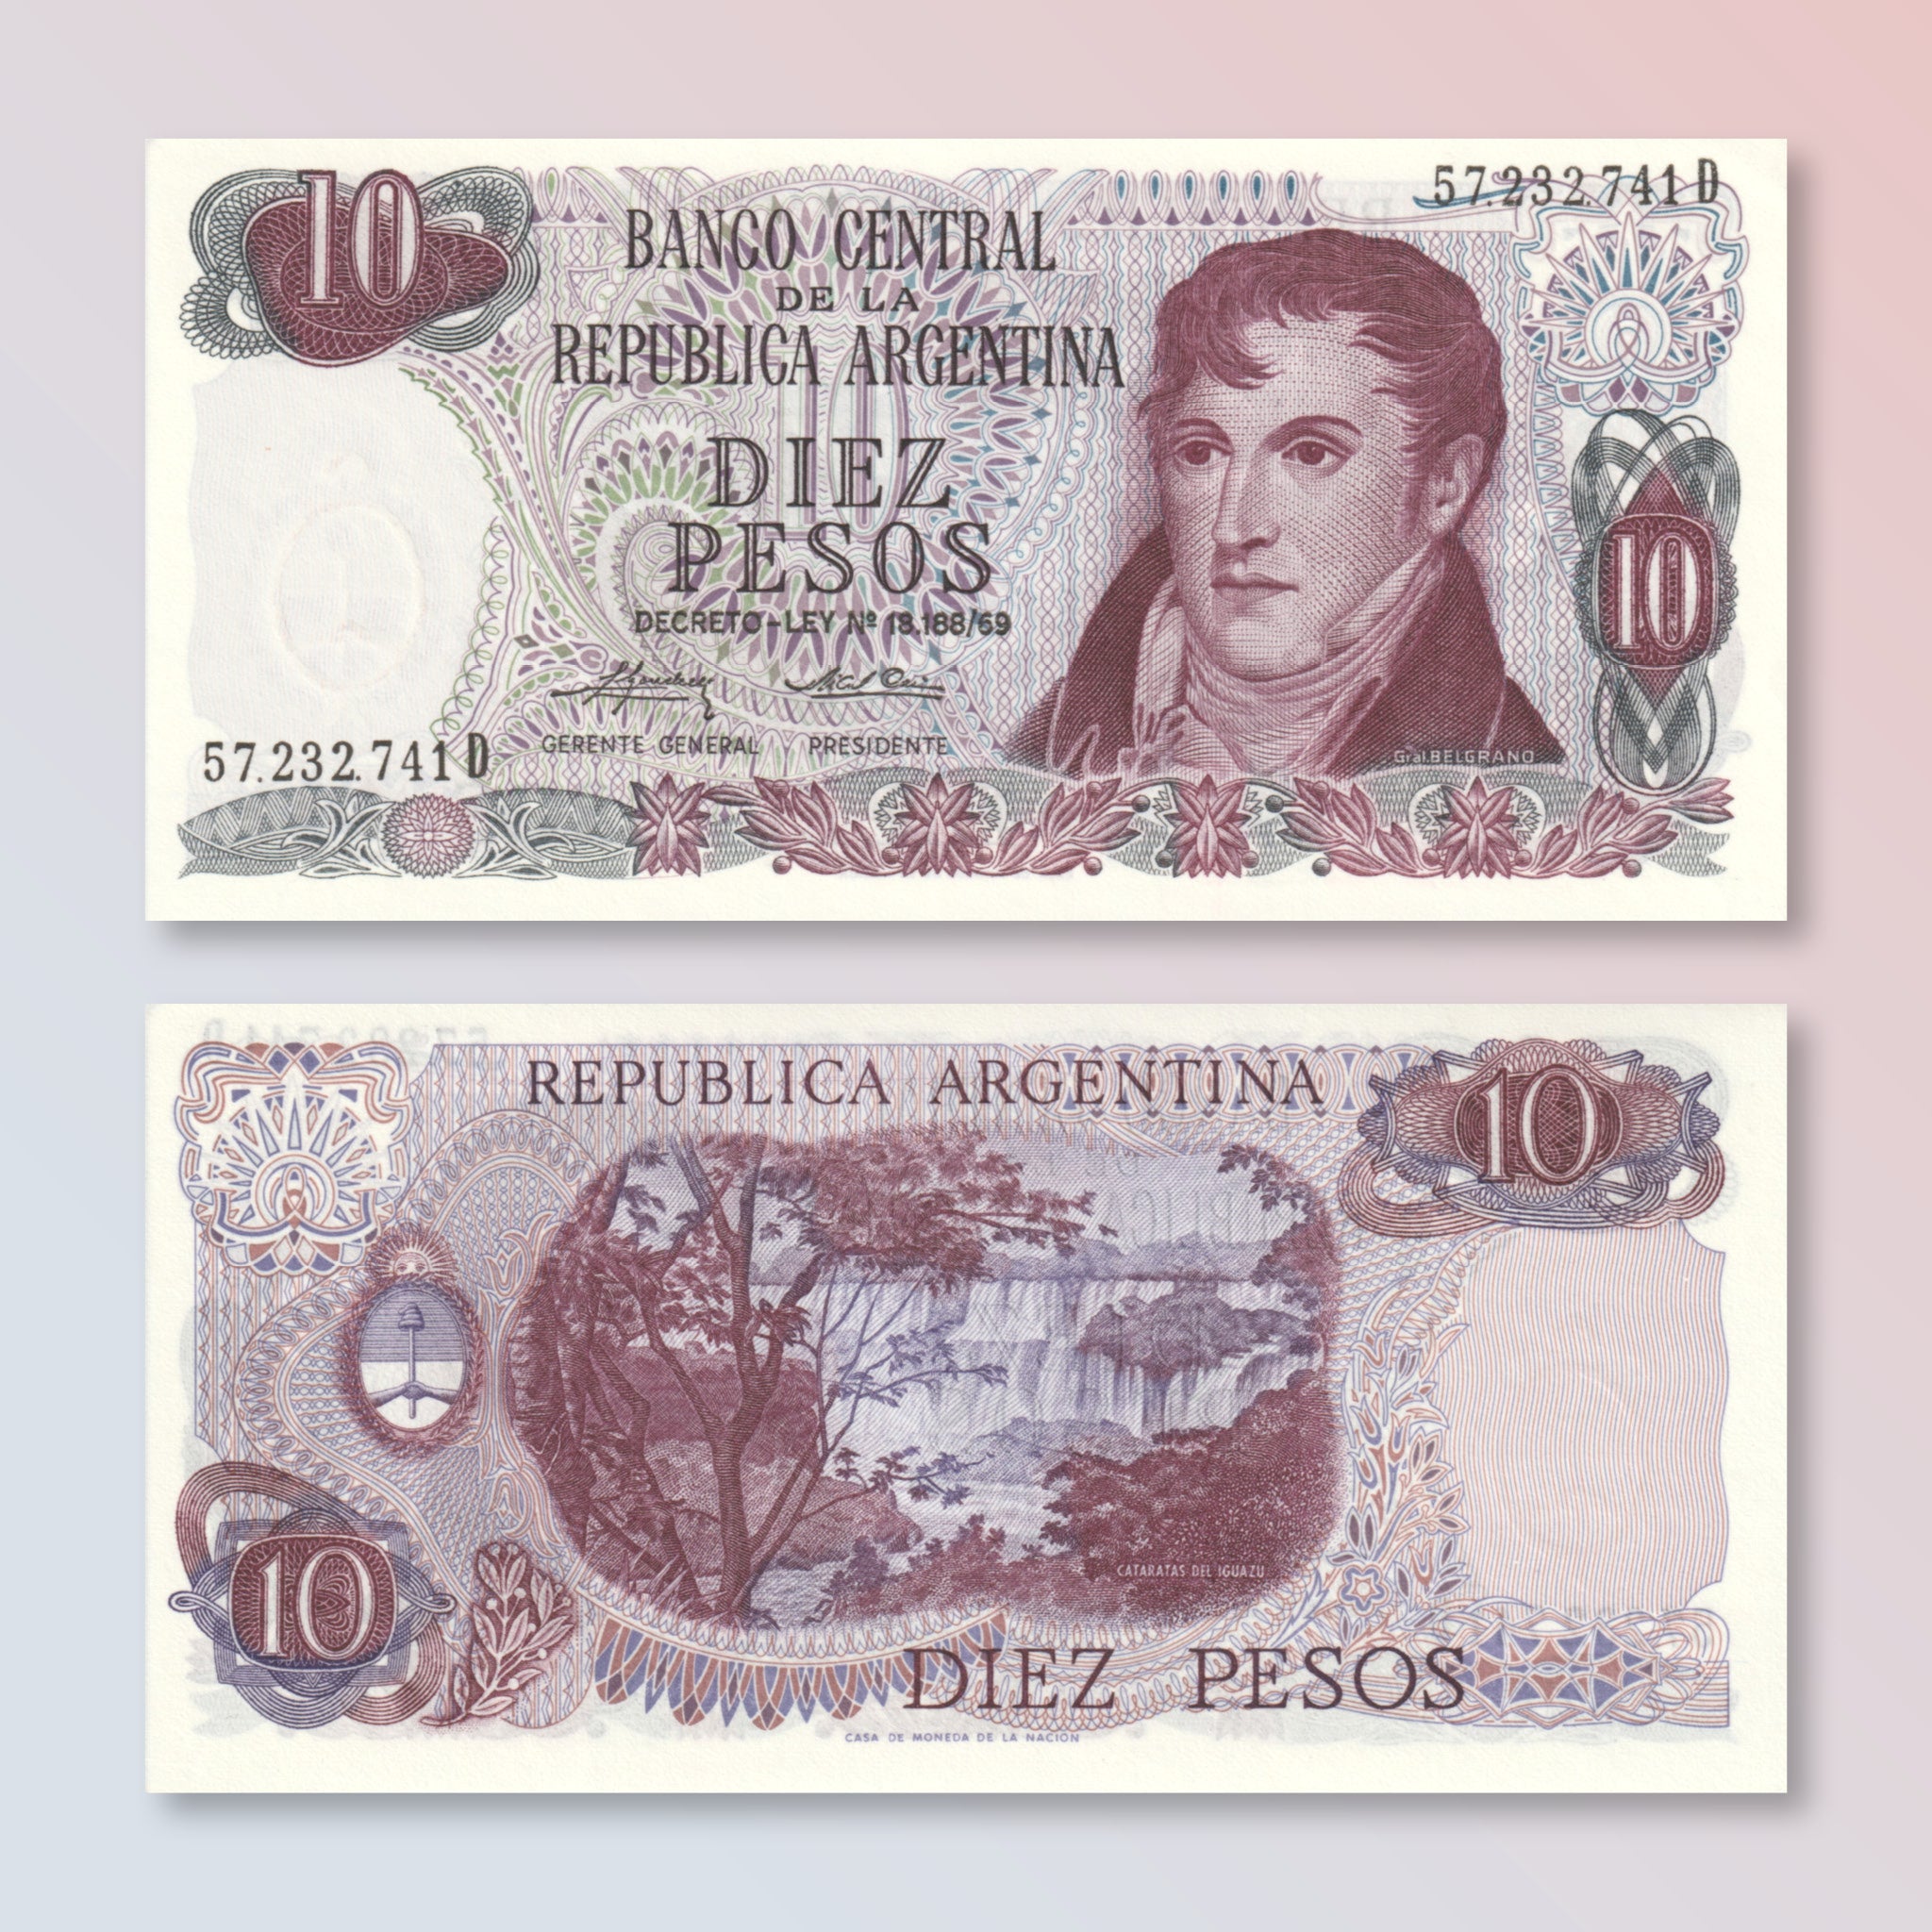 Argentina 10 Pesos, 1975, B348c, P295, UNC - Robert's World Money - World Banknotes